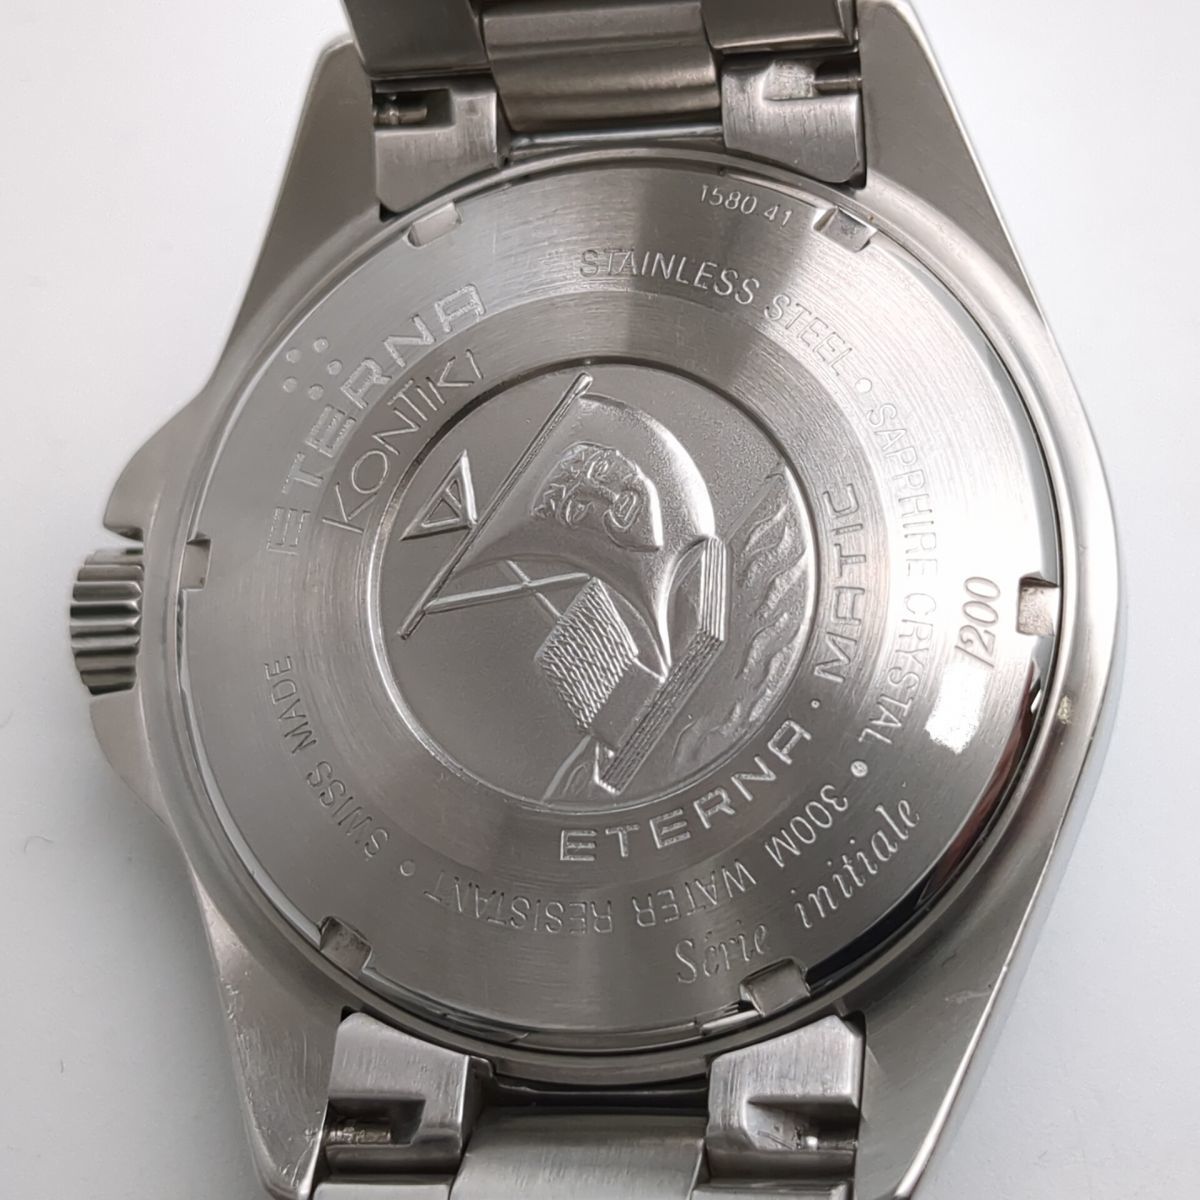  operation verification settled Eterna Conti ki1580.41 self-winding watch 28,800 oscillation black face men's wristwatch ETERNAMATIC KONTIKI *3111/ Fujieda Inter shop 